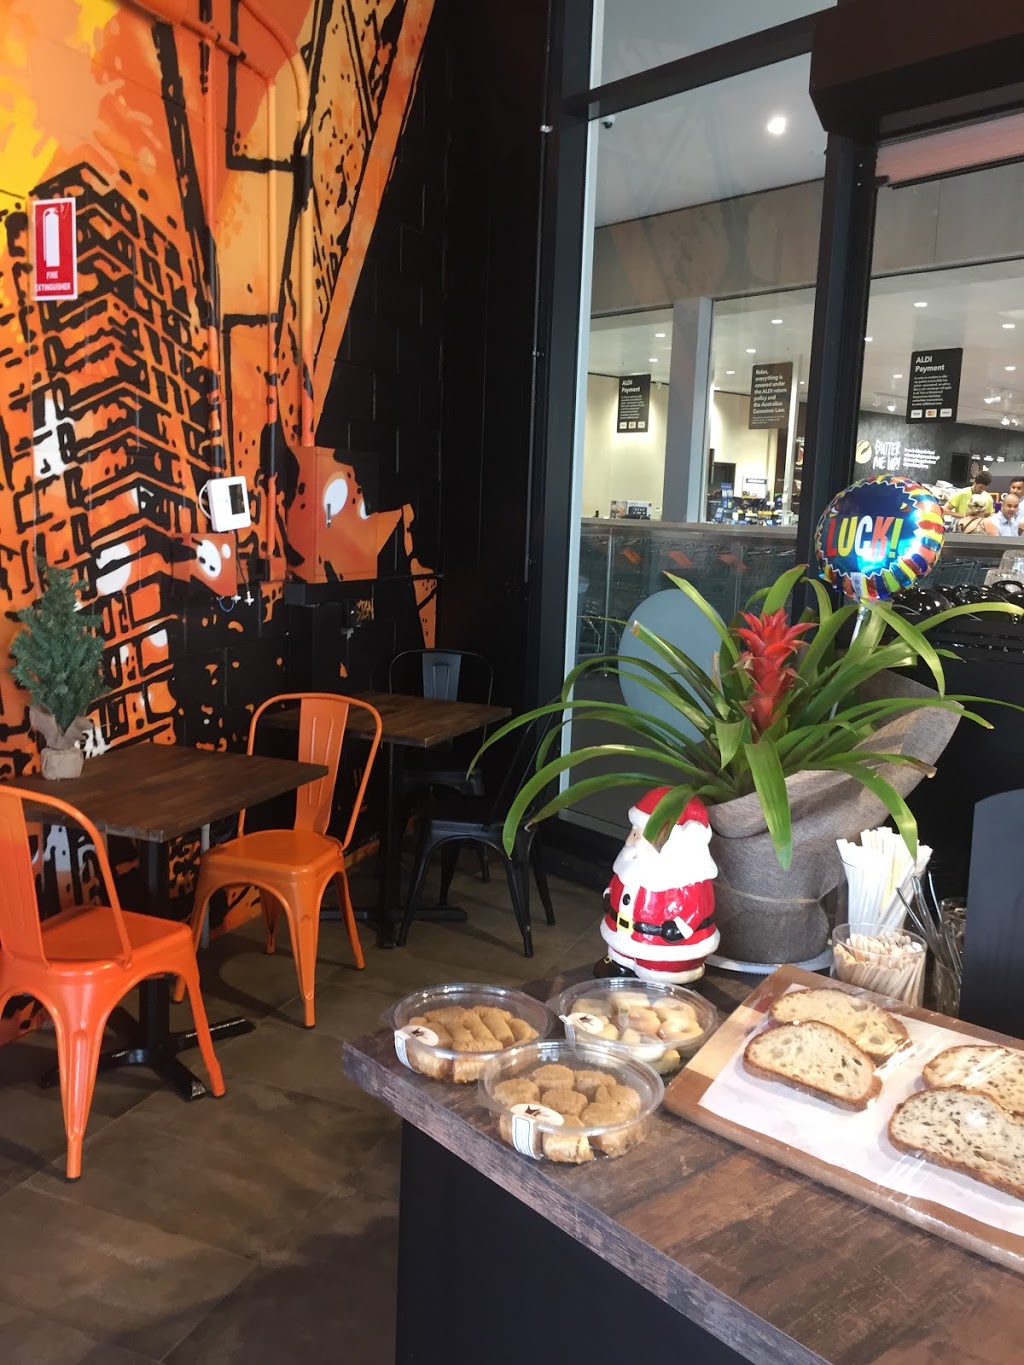 The Magdalene Café | 4 Magdalene Terrace, Wolli Creek NSW 2205, Australia